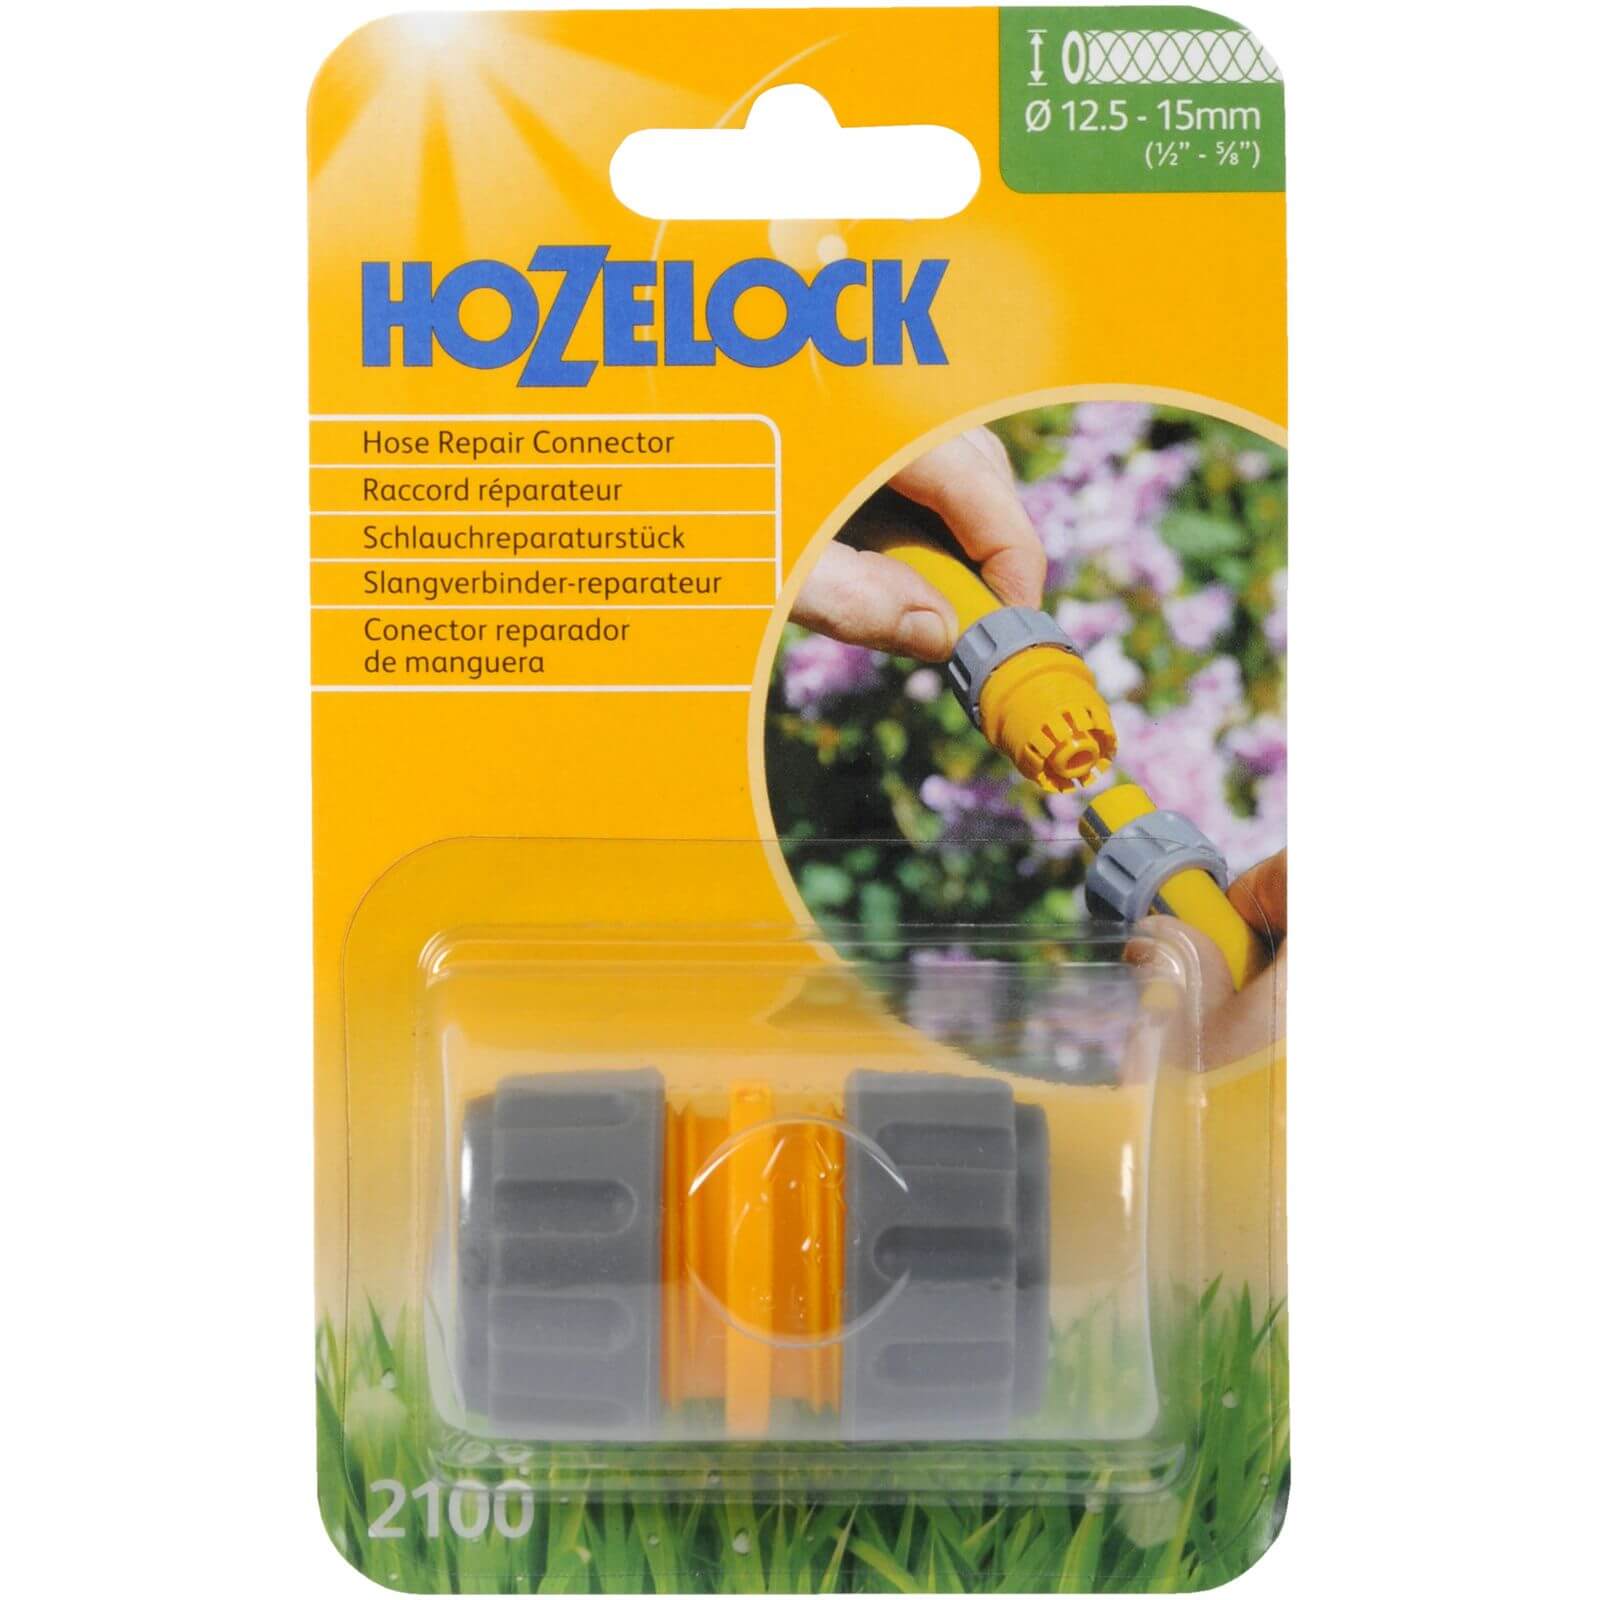 Hozelock Hose Repair Connector - 12.5mm